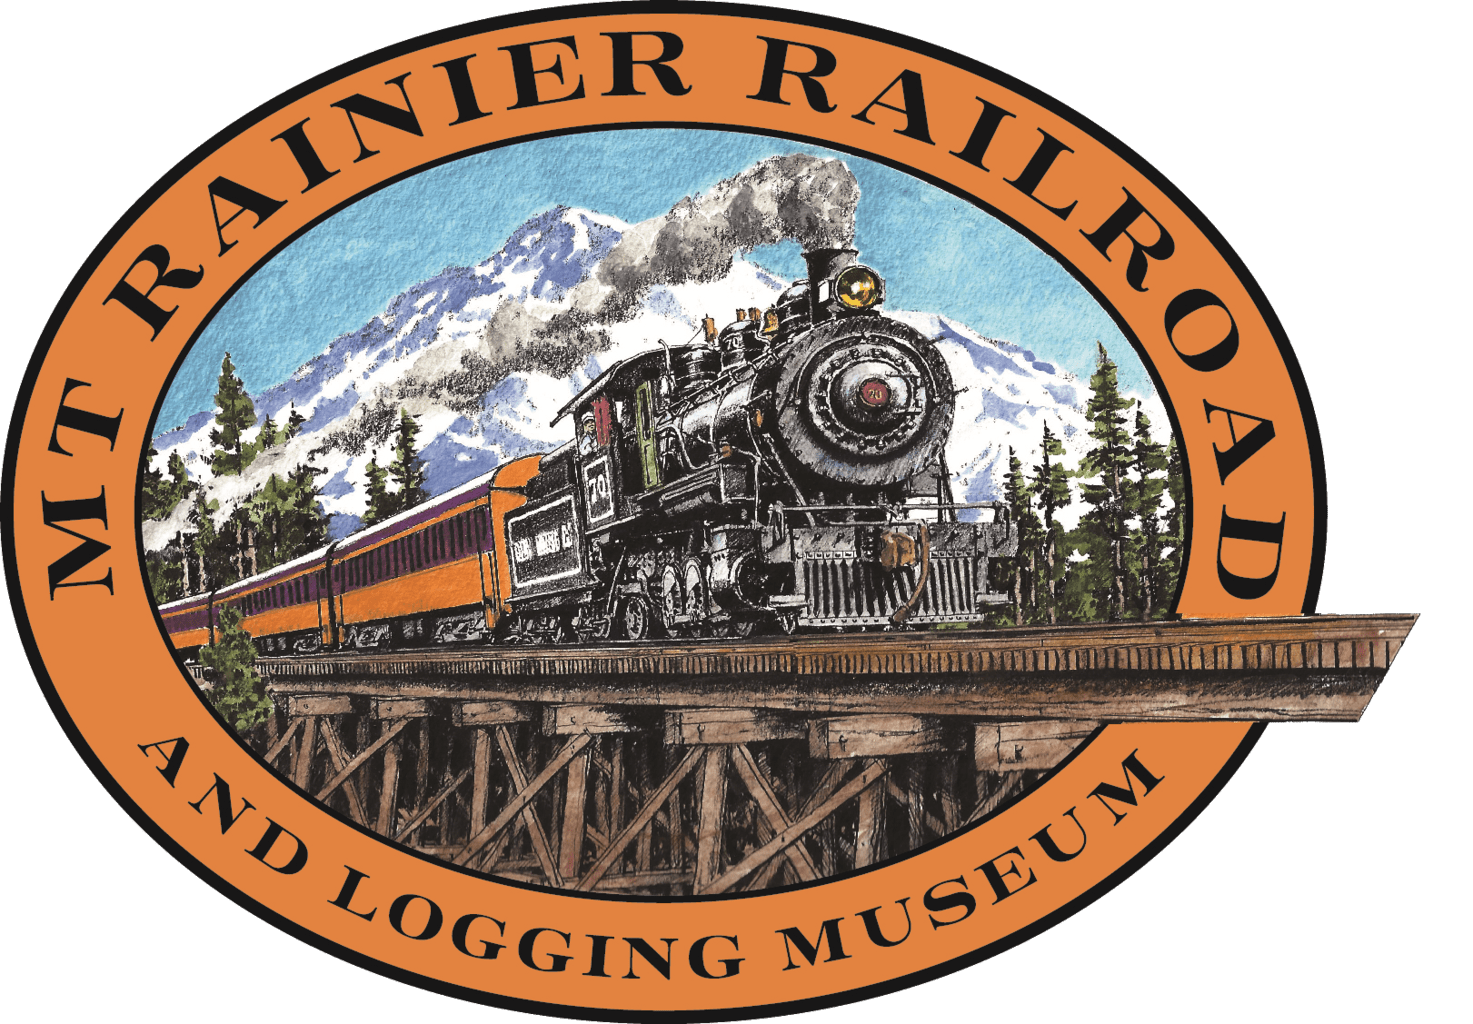 Photo Courtesy: Mt. Rainier Railroad and Logging Museum